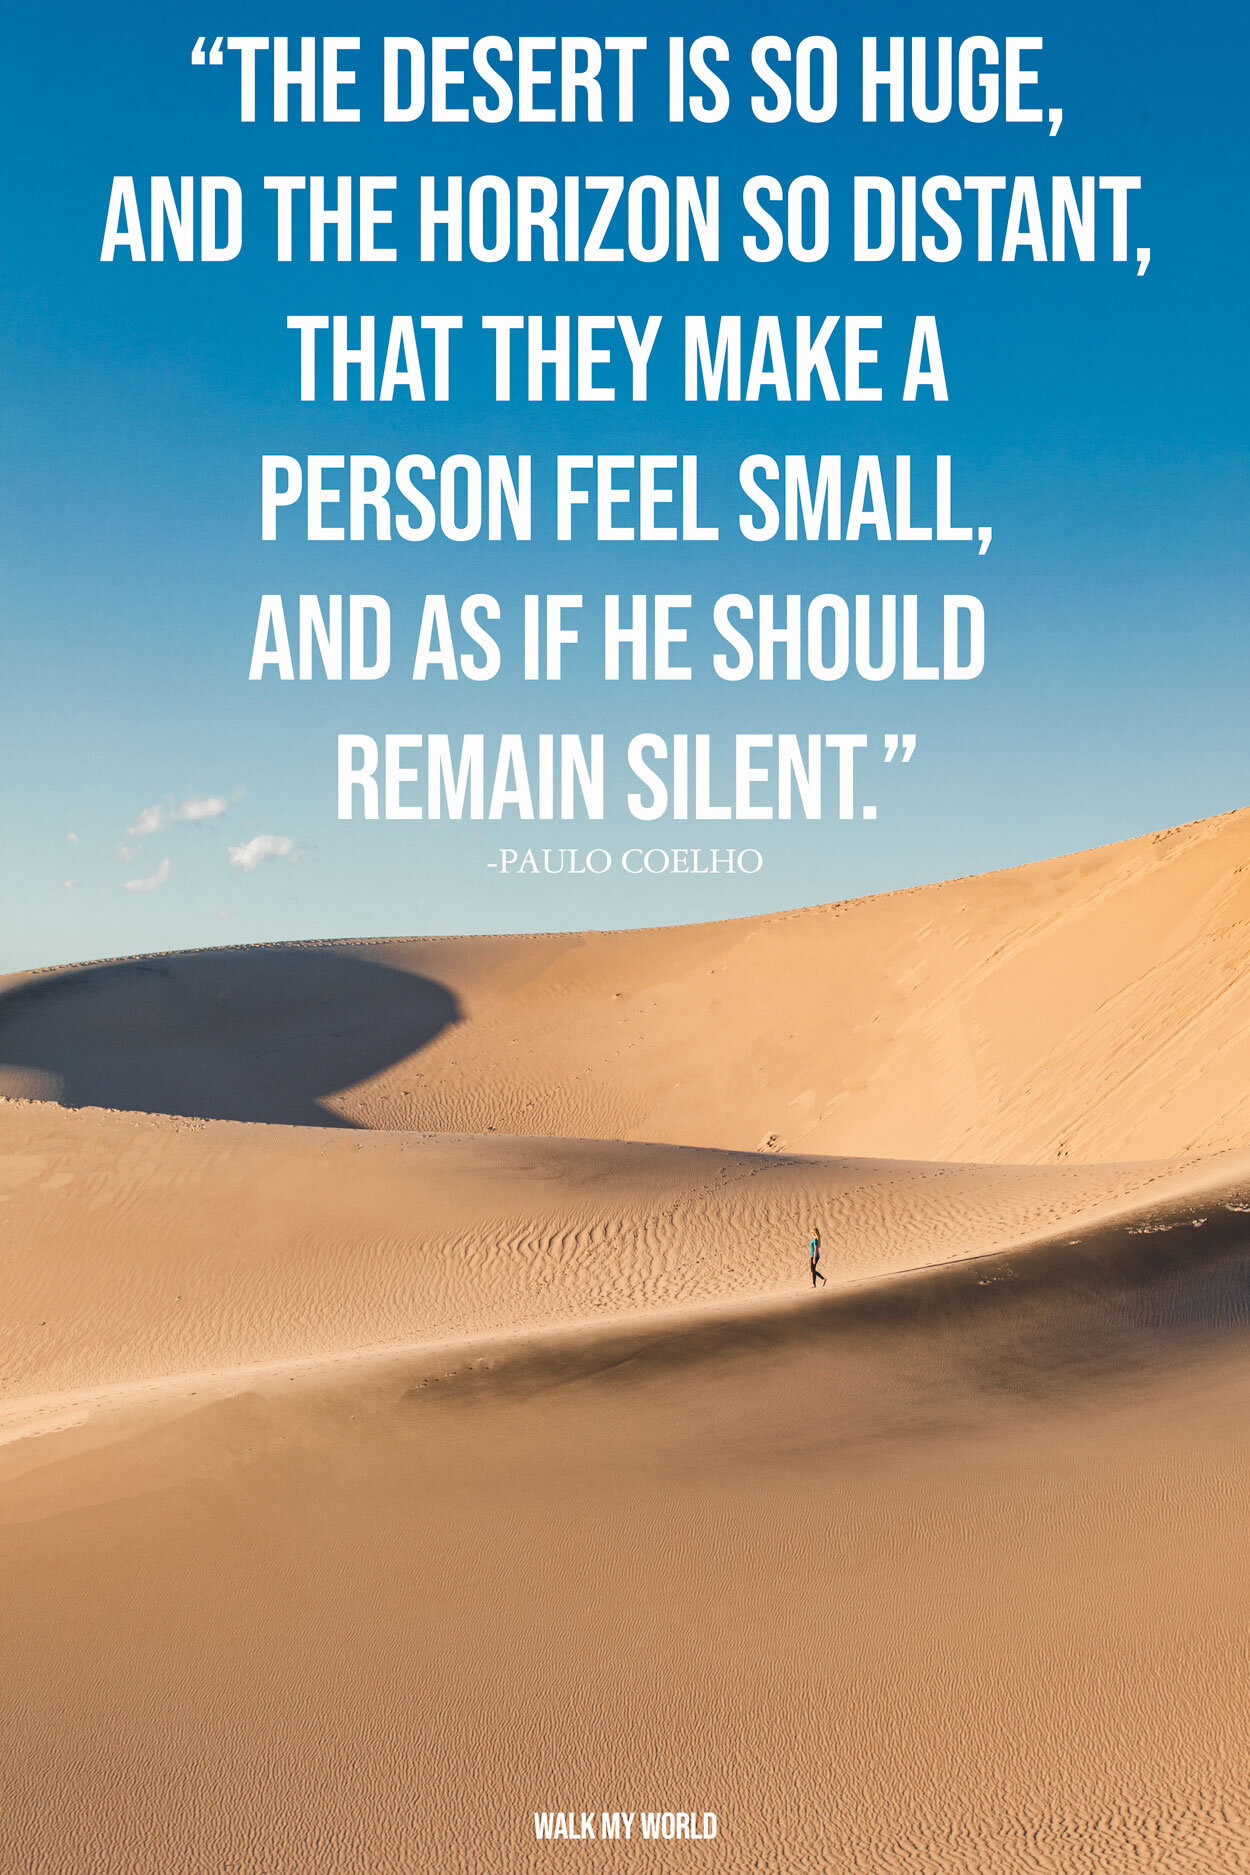 The most inspirational desert quotes - Paulo Coelho